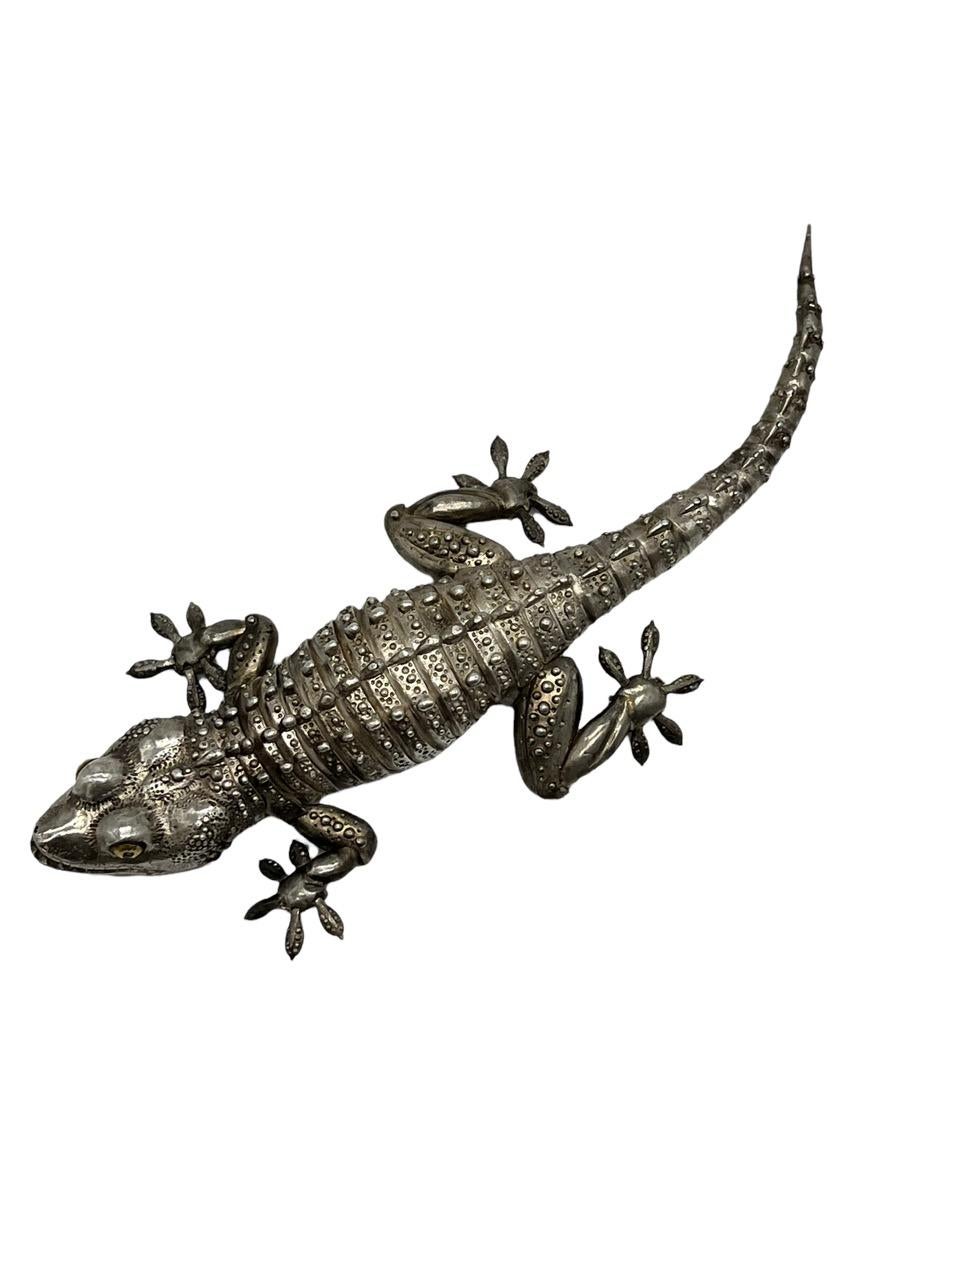 Oleg Konstantinov Fully Articulated Gecko Made of Sterling Silver 1